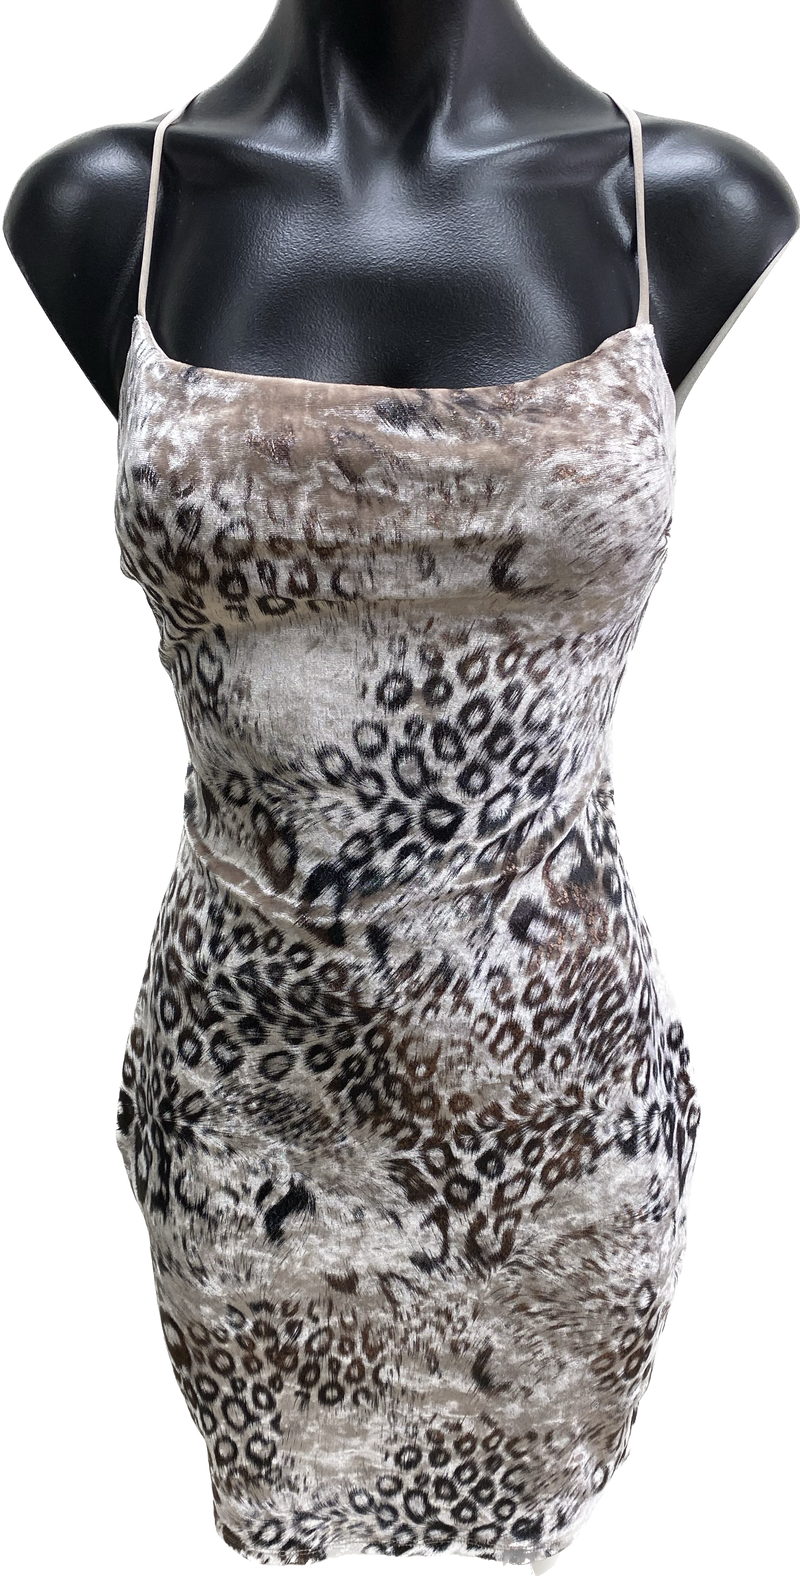 Animal print dress